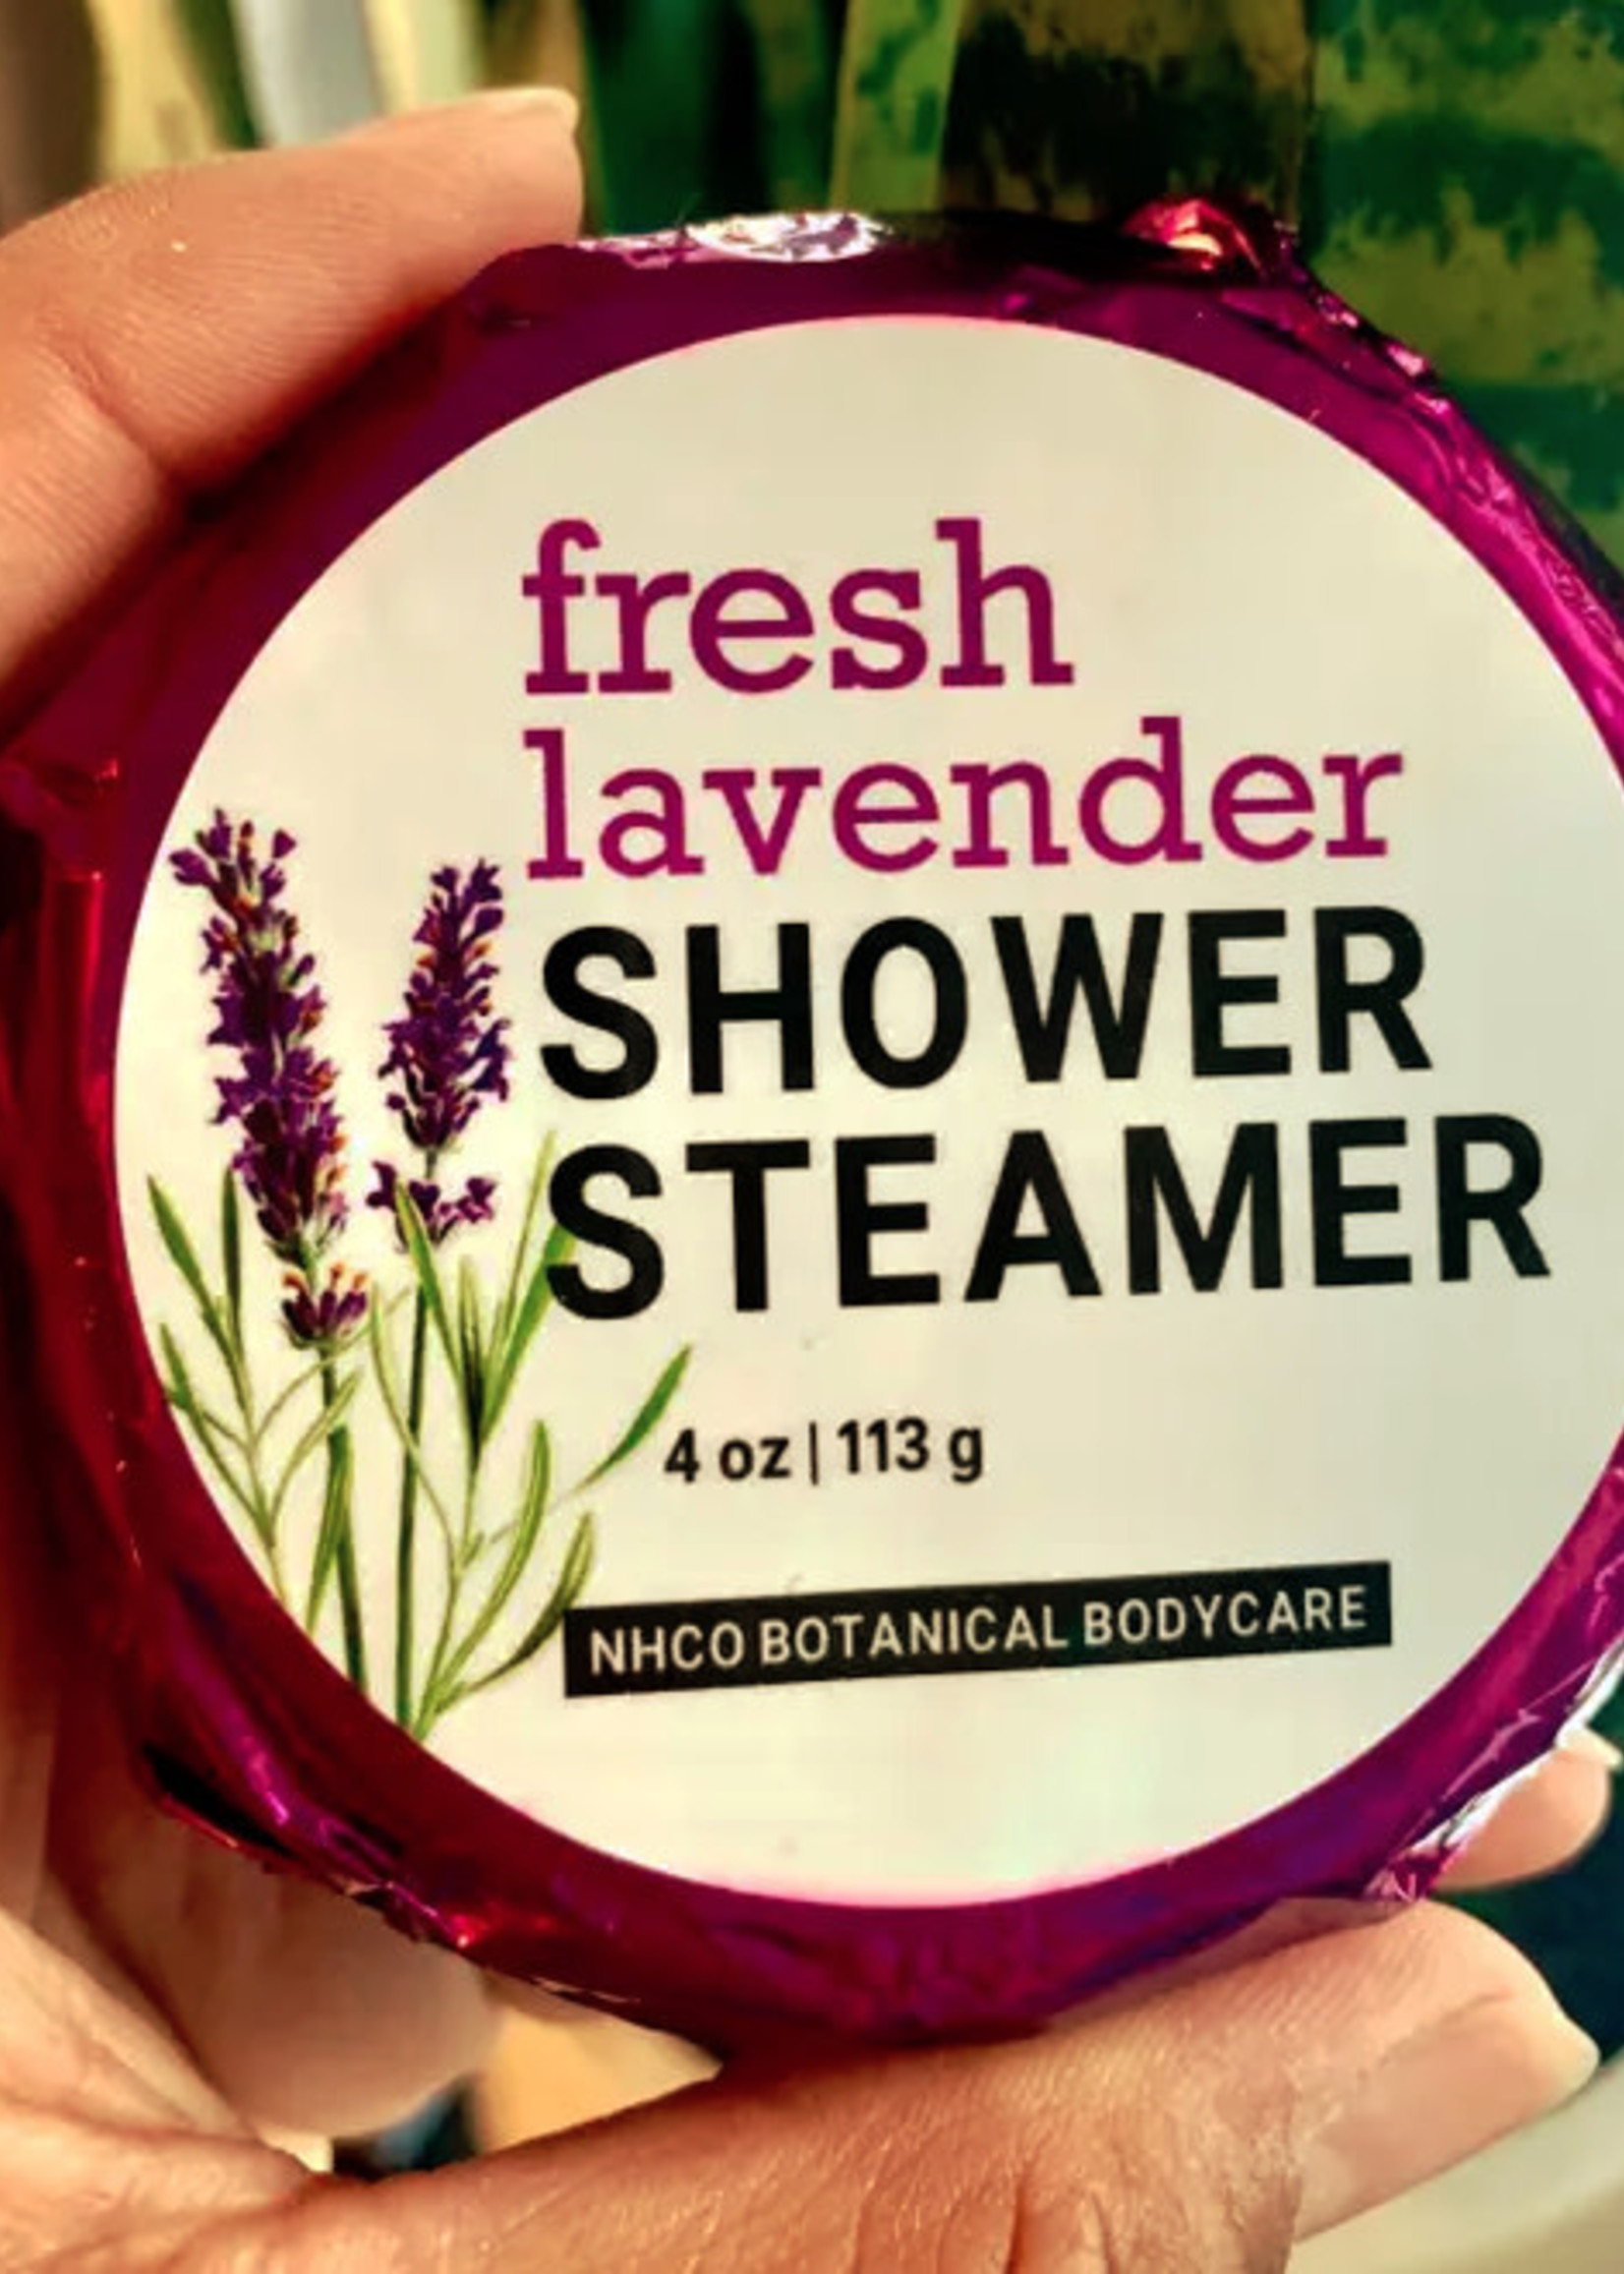 NHCO Botanical Bodycare NHCO Botanical Bodycare, Fresh Lavender Shower Steamer, 4oz